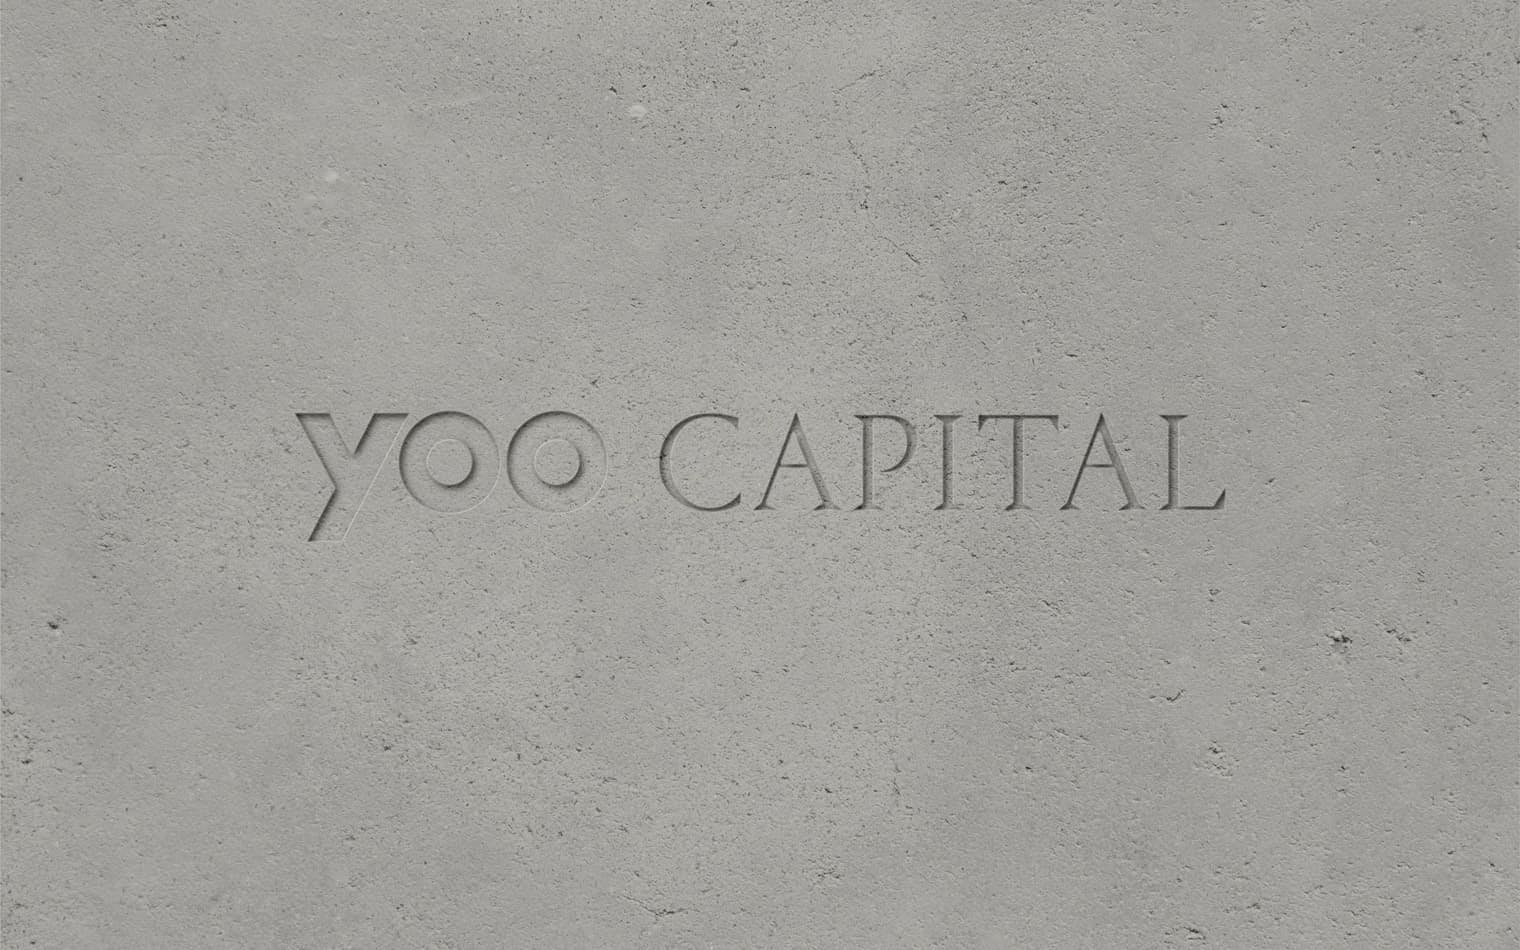 Yoo Capital | Logo Design | Steve Edge Design